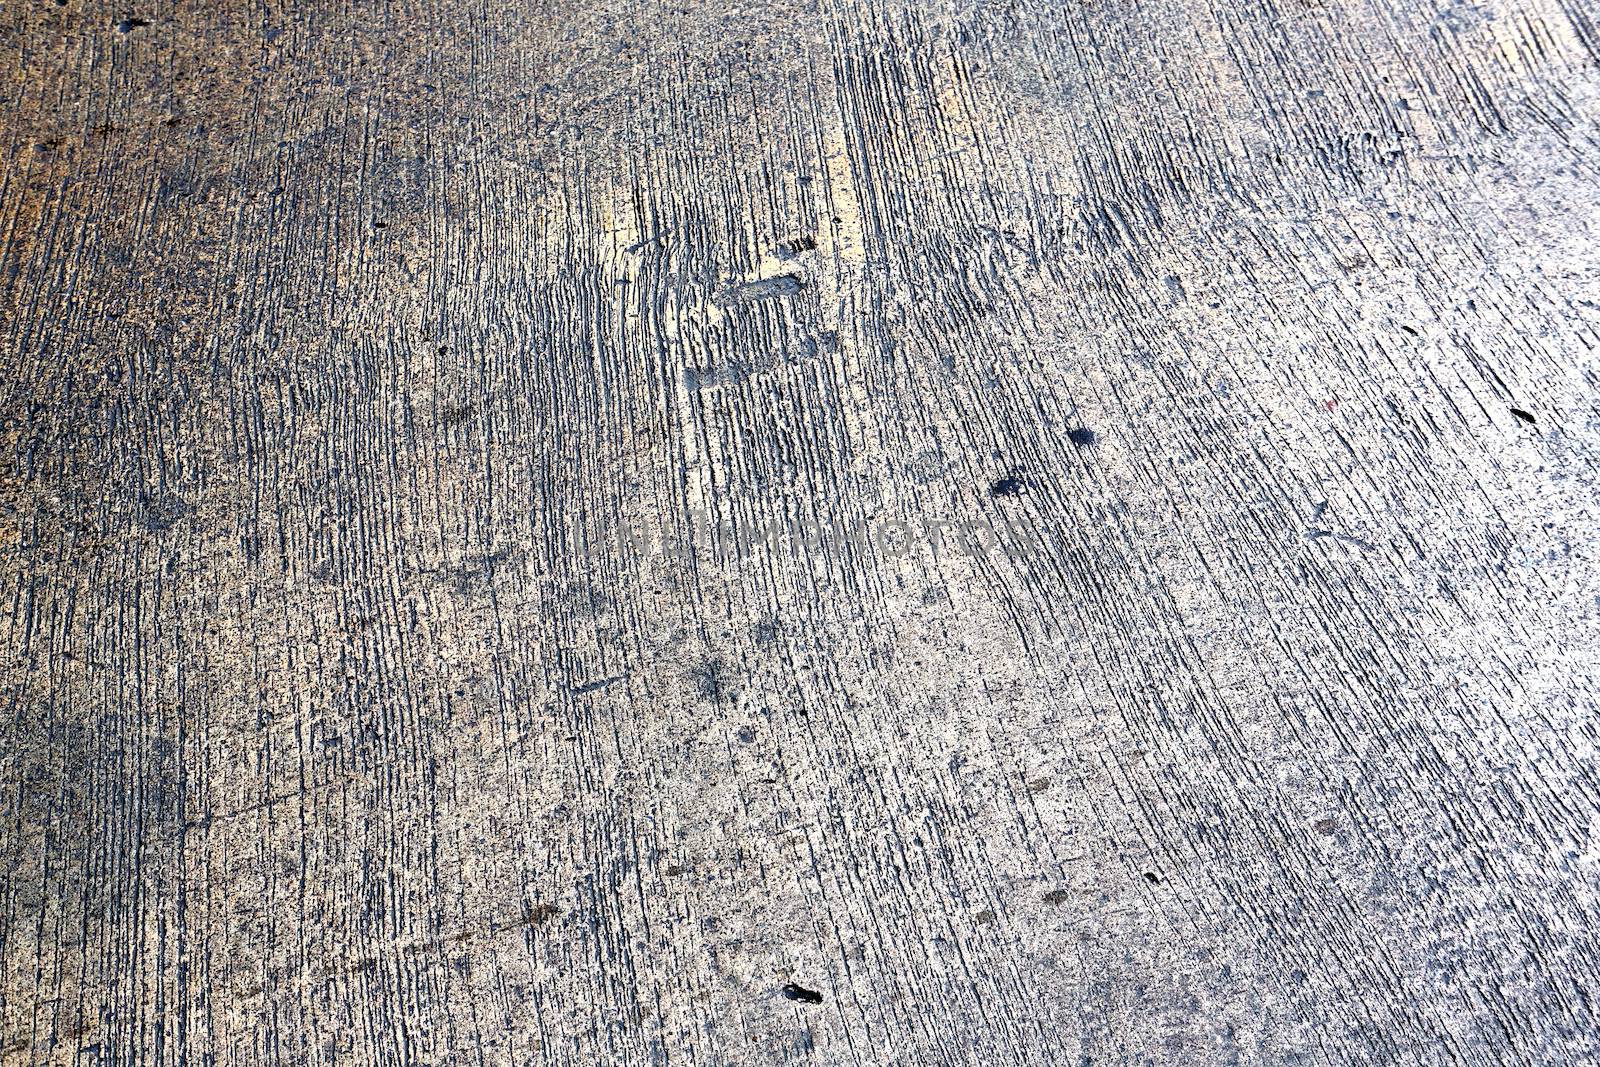 very old concrete street texture